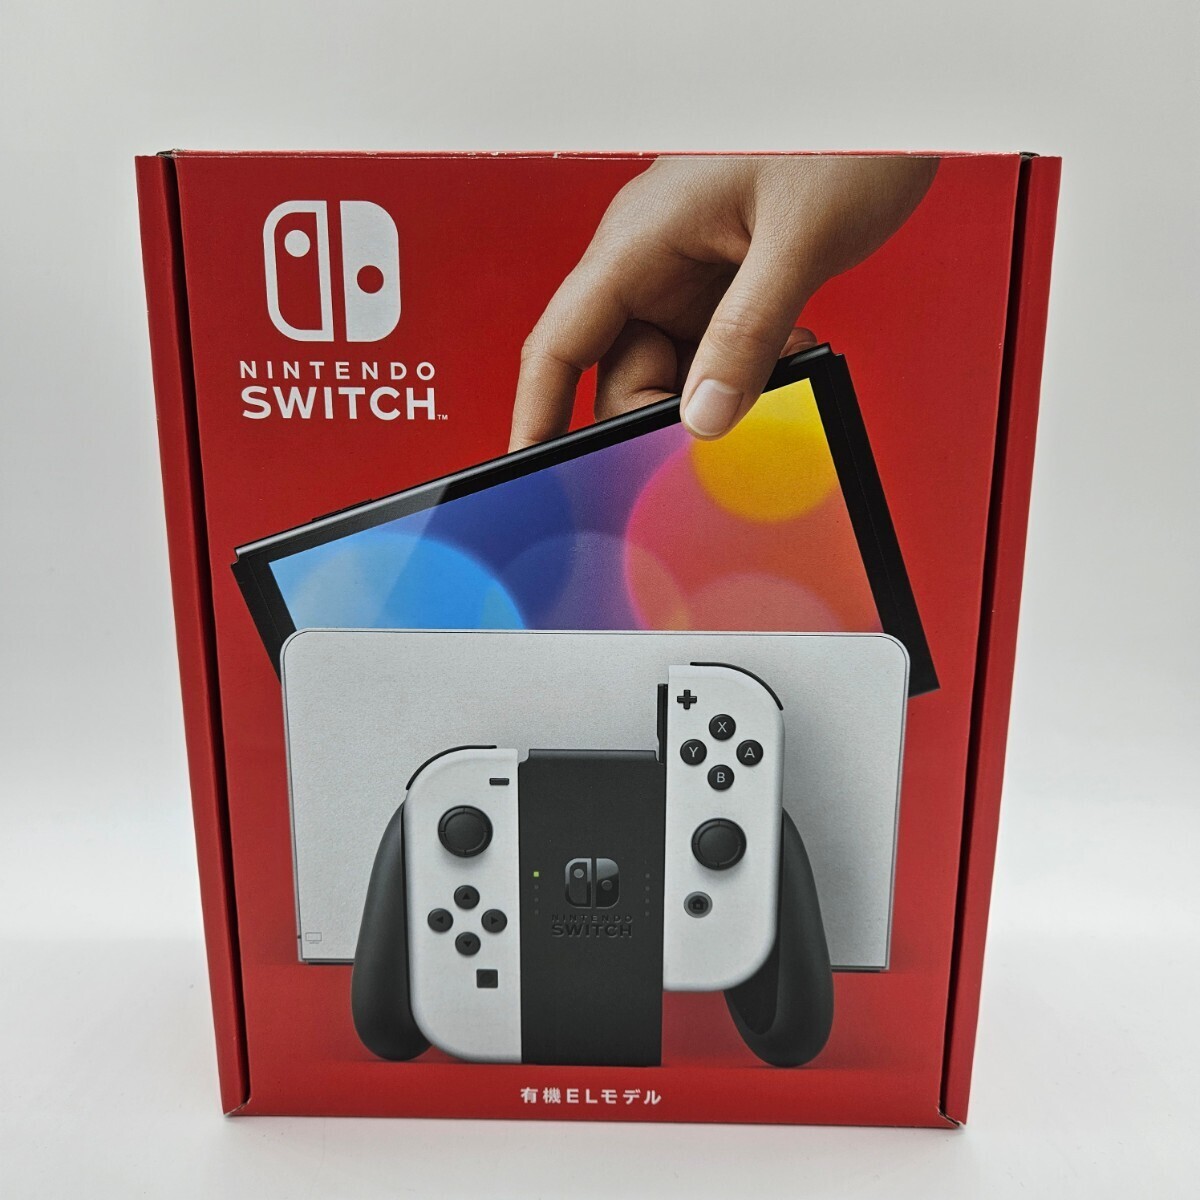  guarantee remainder equipped Nintendo Switch Nintendo switch have machine EL model body white Junk 